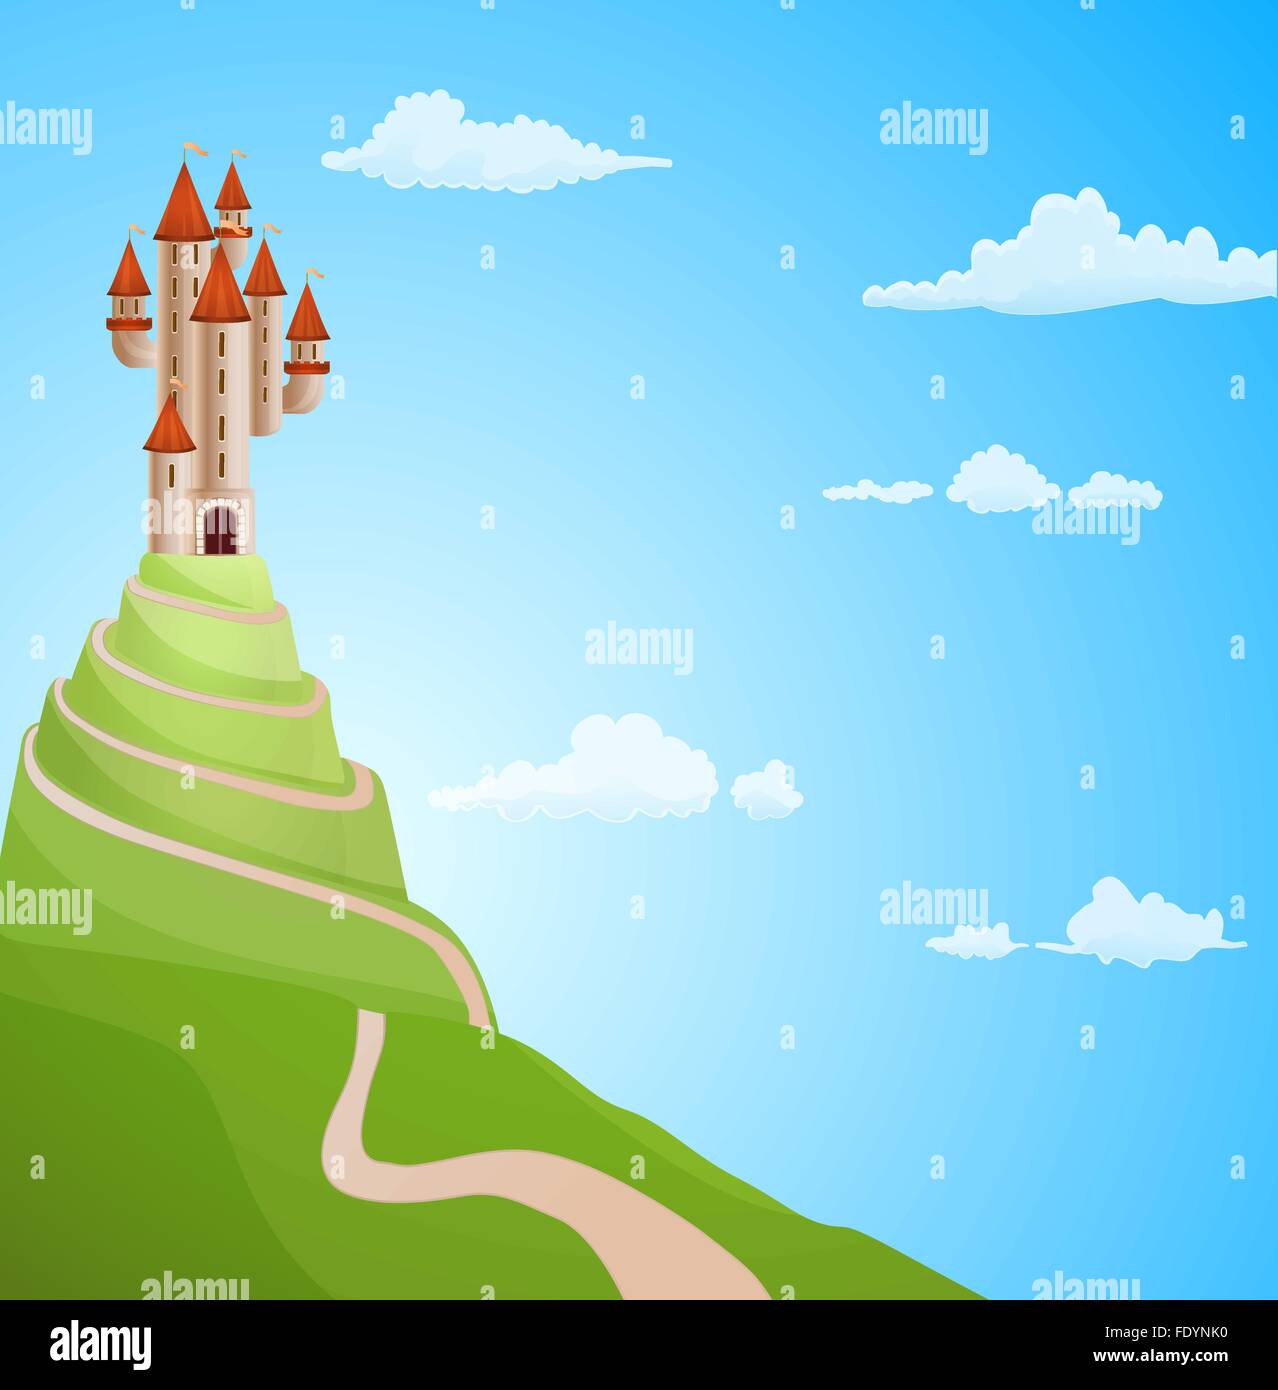 Burg auf dem Hügel mit Straße Hintergrund Illustration. Vektor Stock Vektor